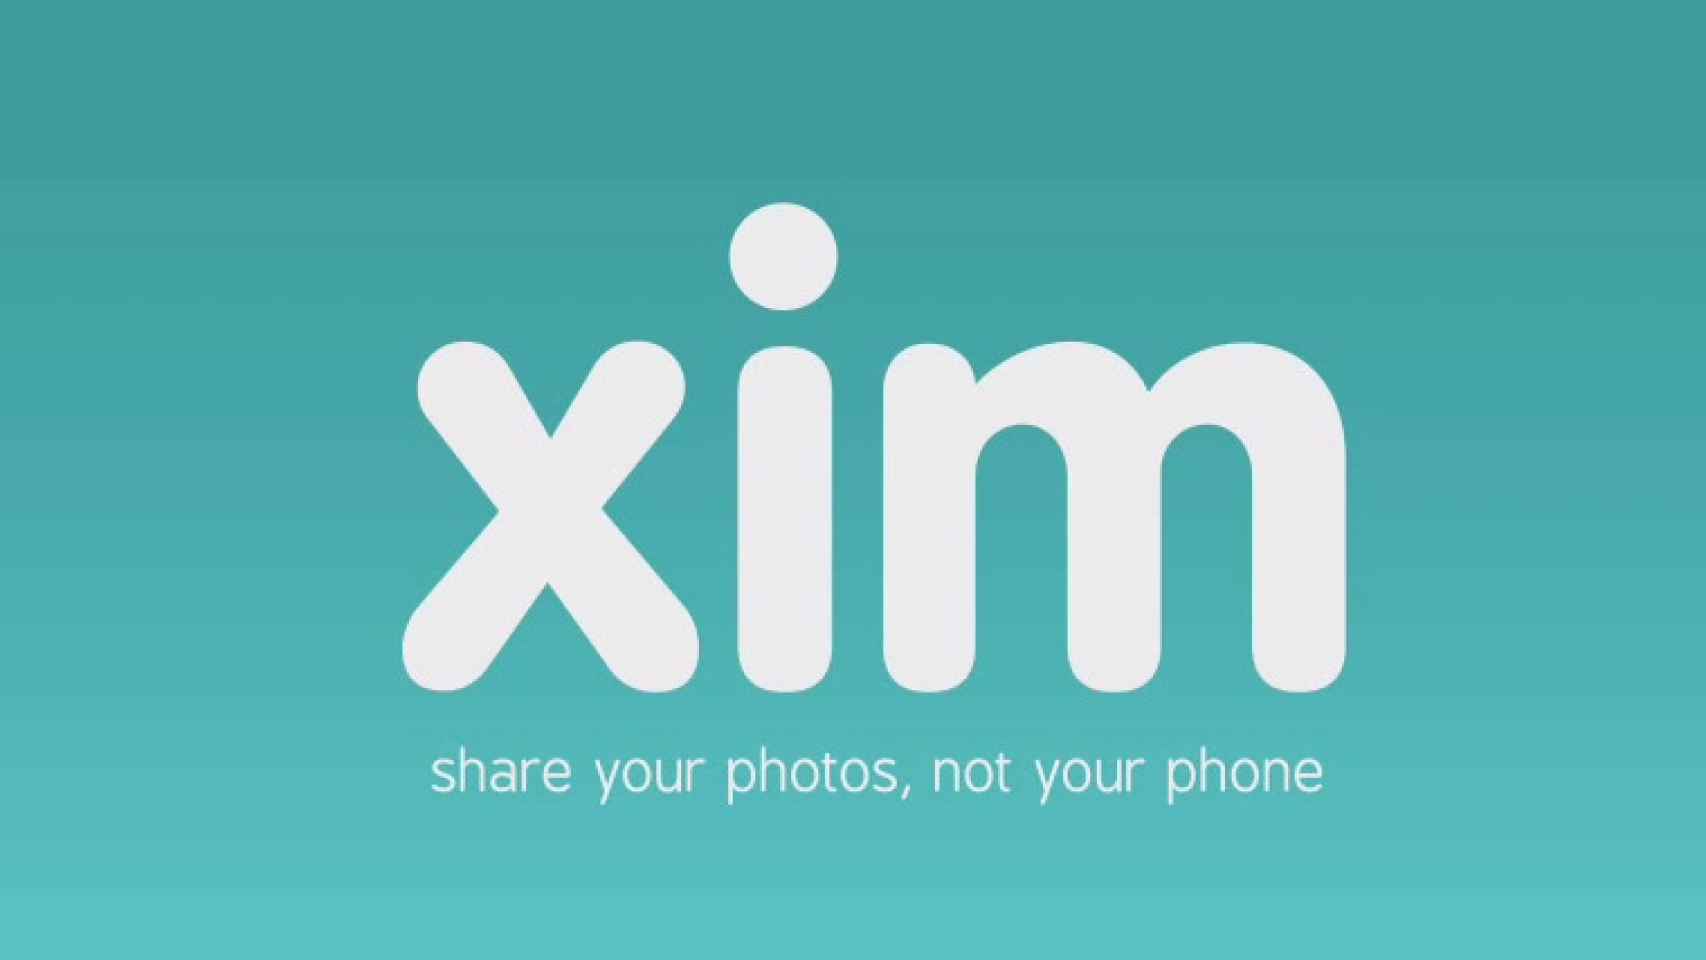 Microsoft XIM, la app para compartir imágenes sin esfuerzo compatible con Chromecast